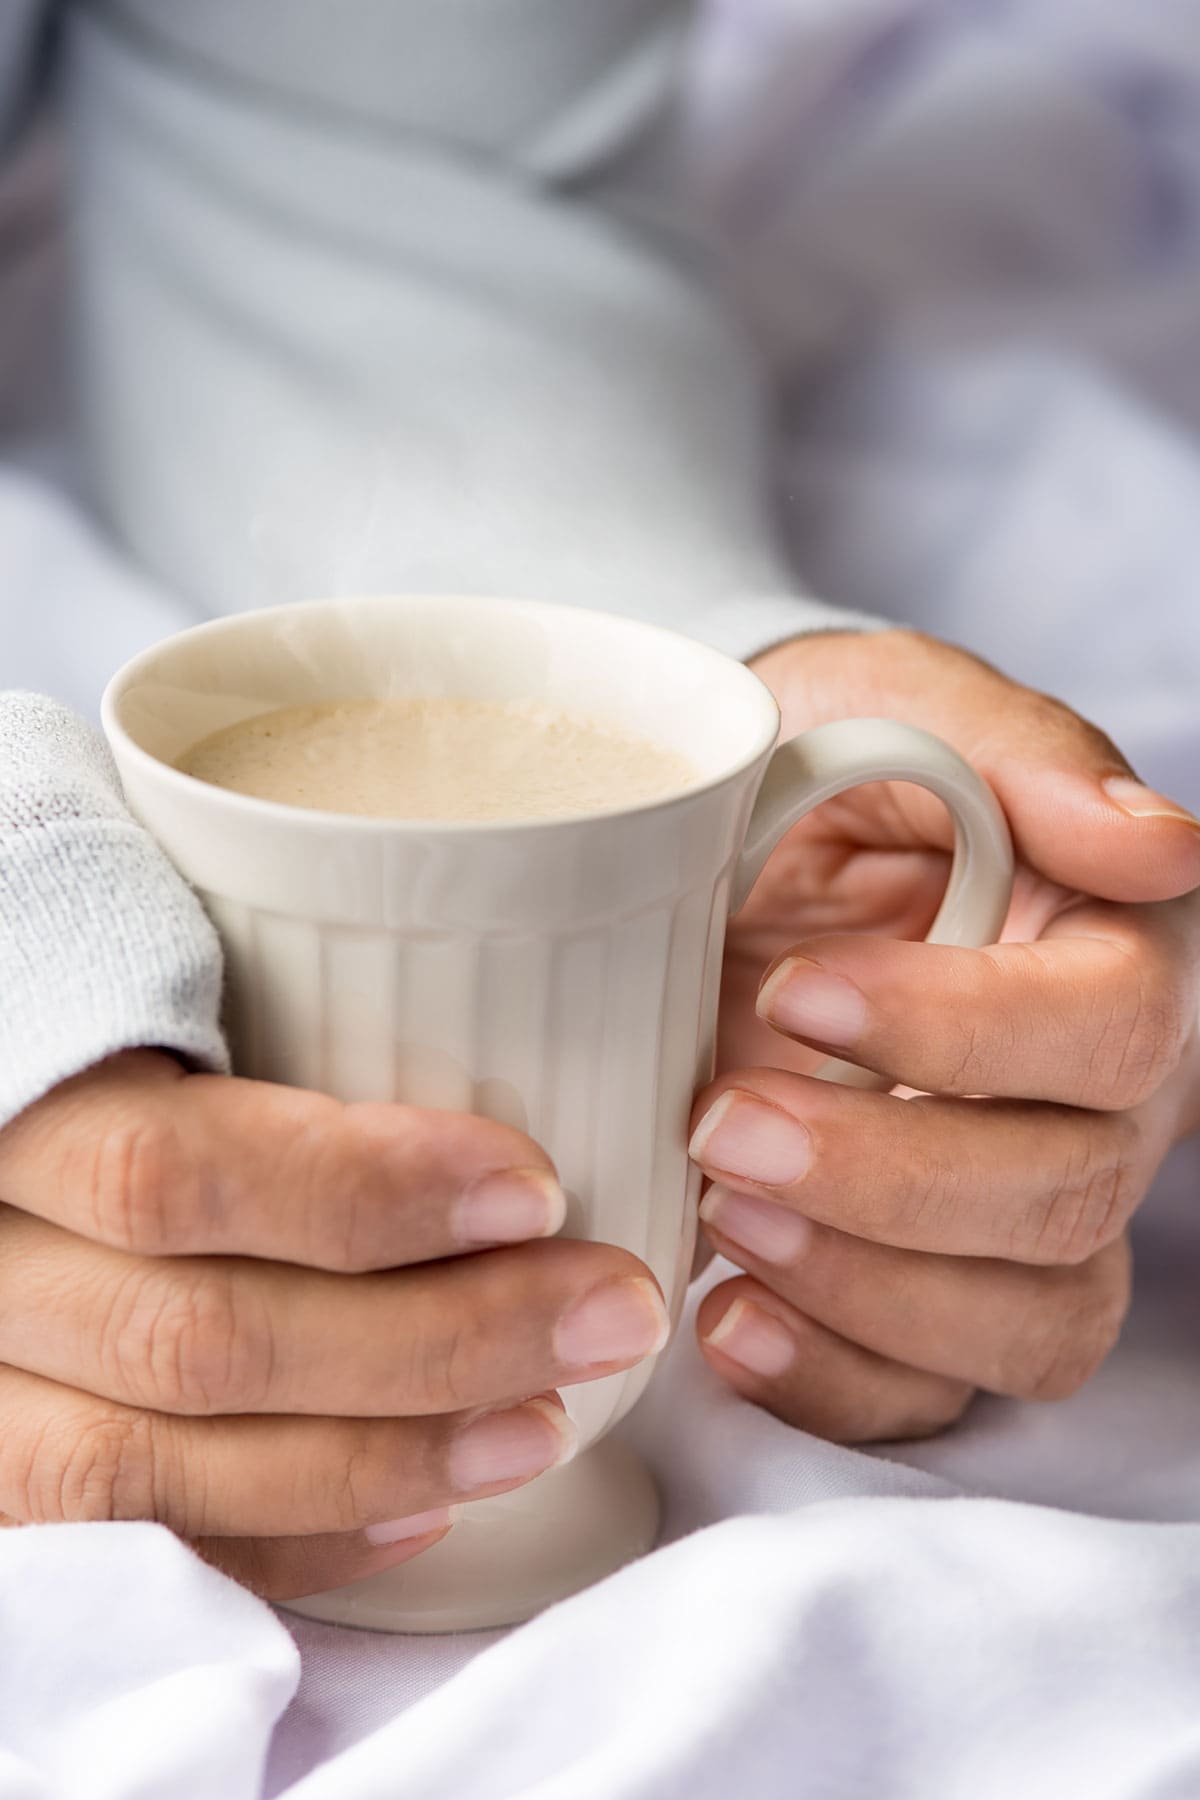 Hands holding a Cup of Ponche de Desayuno (Breakfast Eggnog)